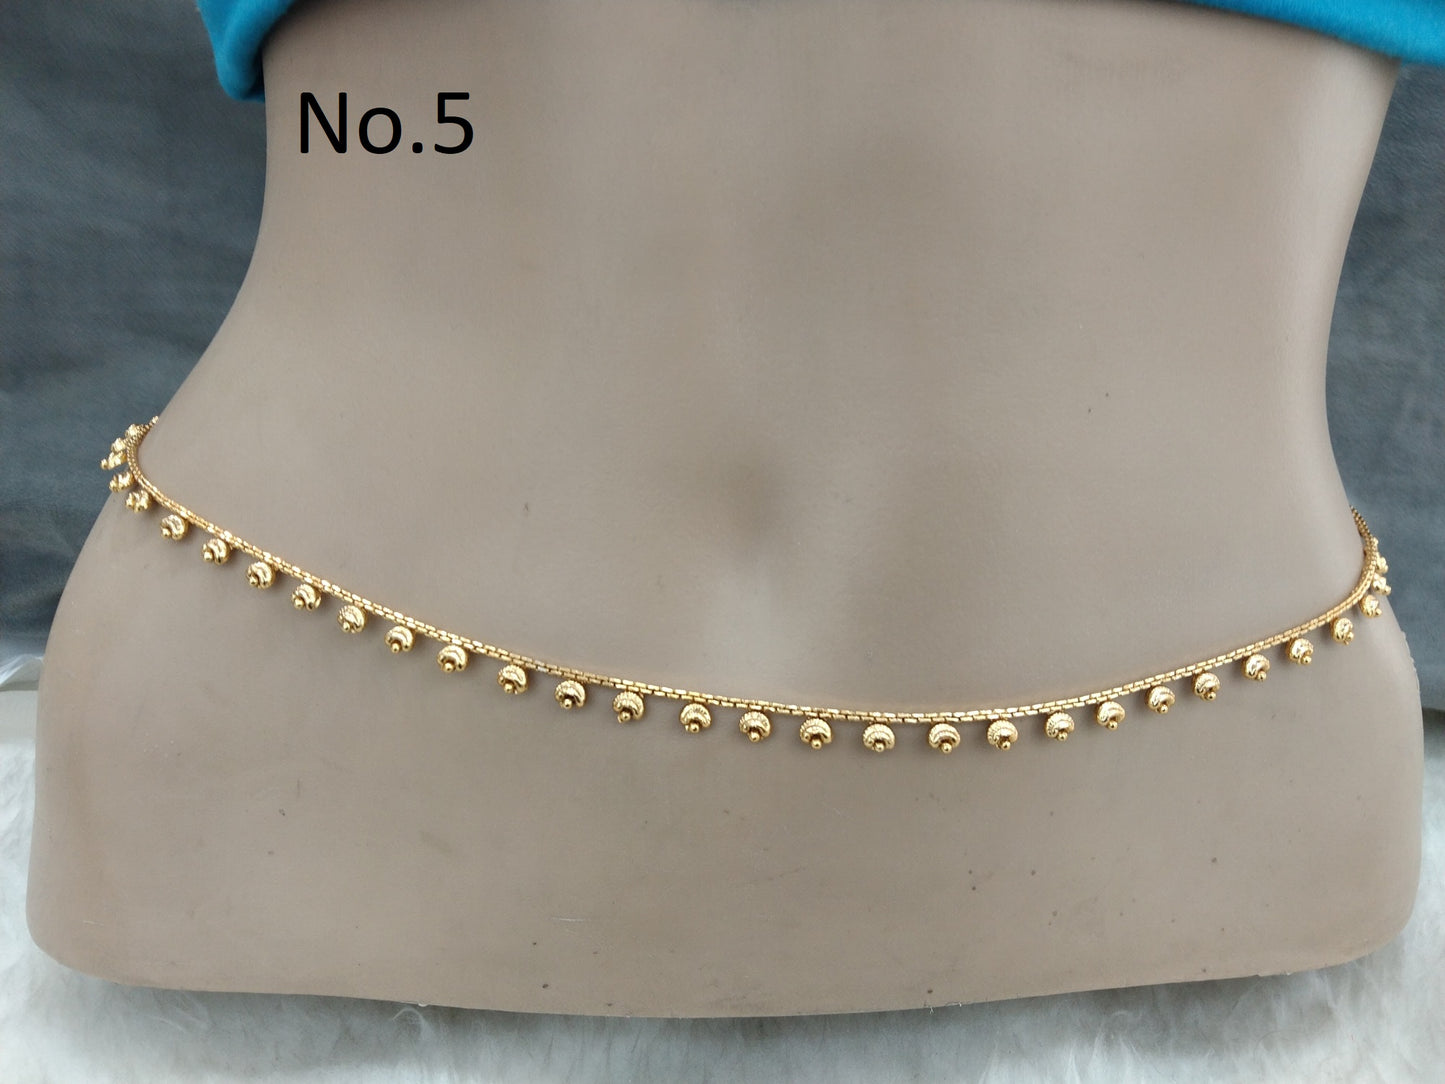 Waist Chain Gold Polki Belly Waist Sari Saree Chain Jewelry Indian Kamarbandh Kamarband Belt/Simple Body Chain Jewellery